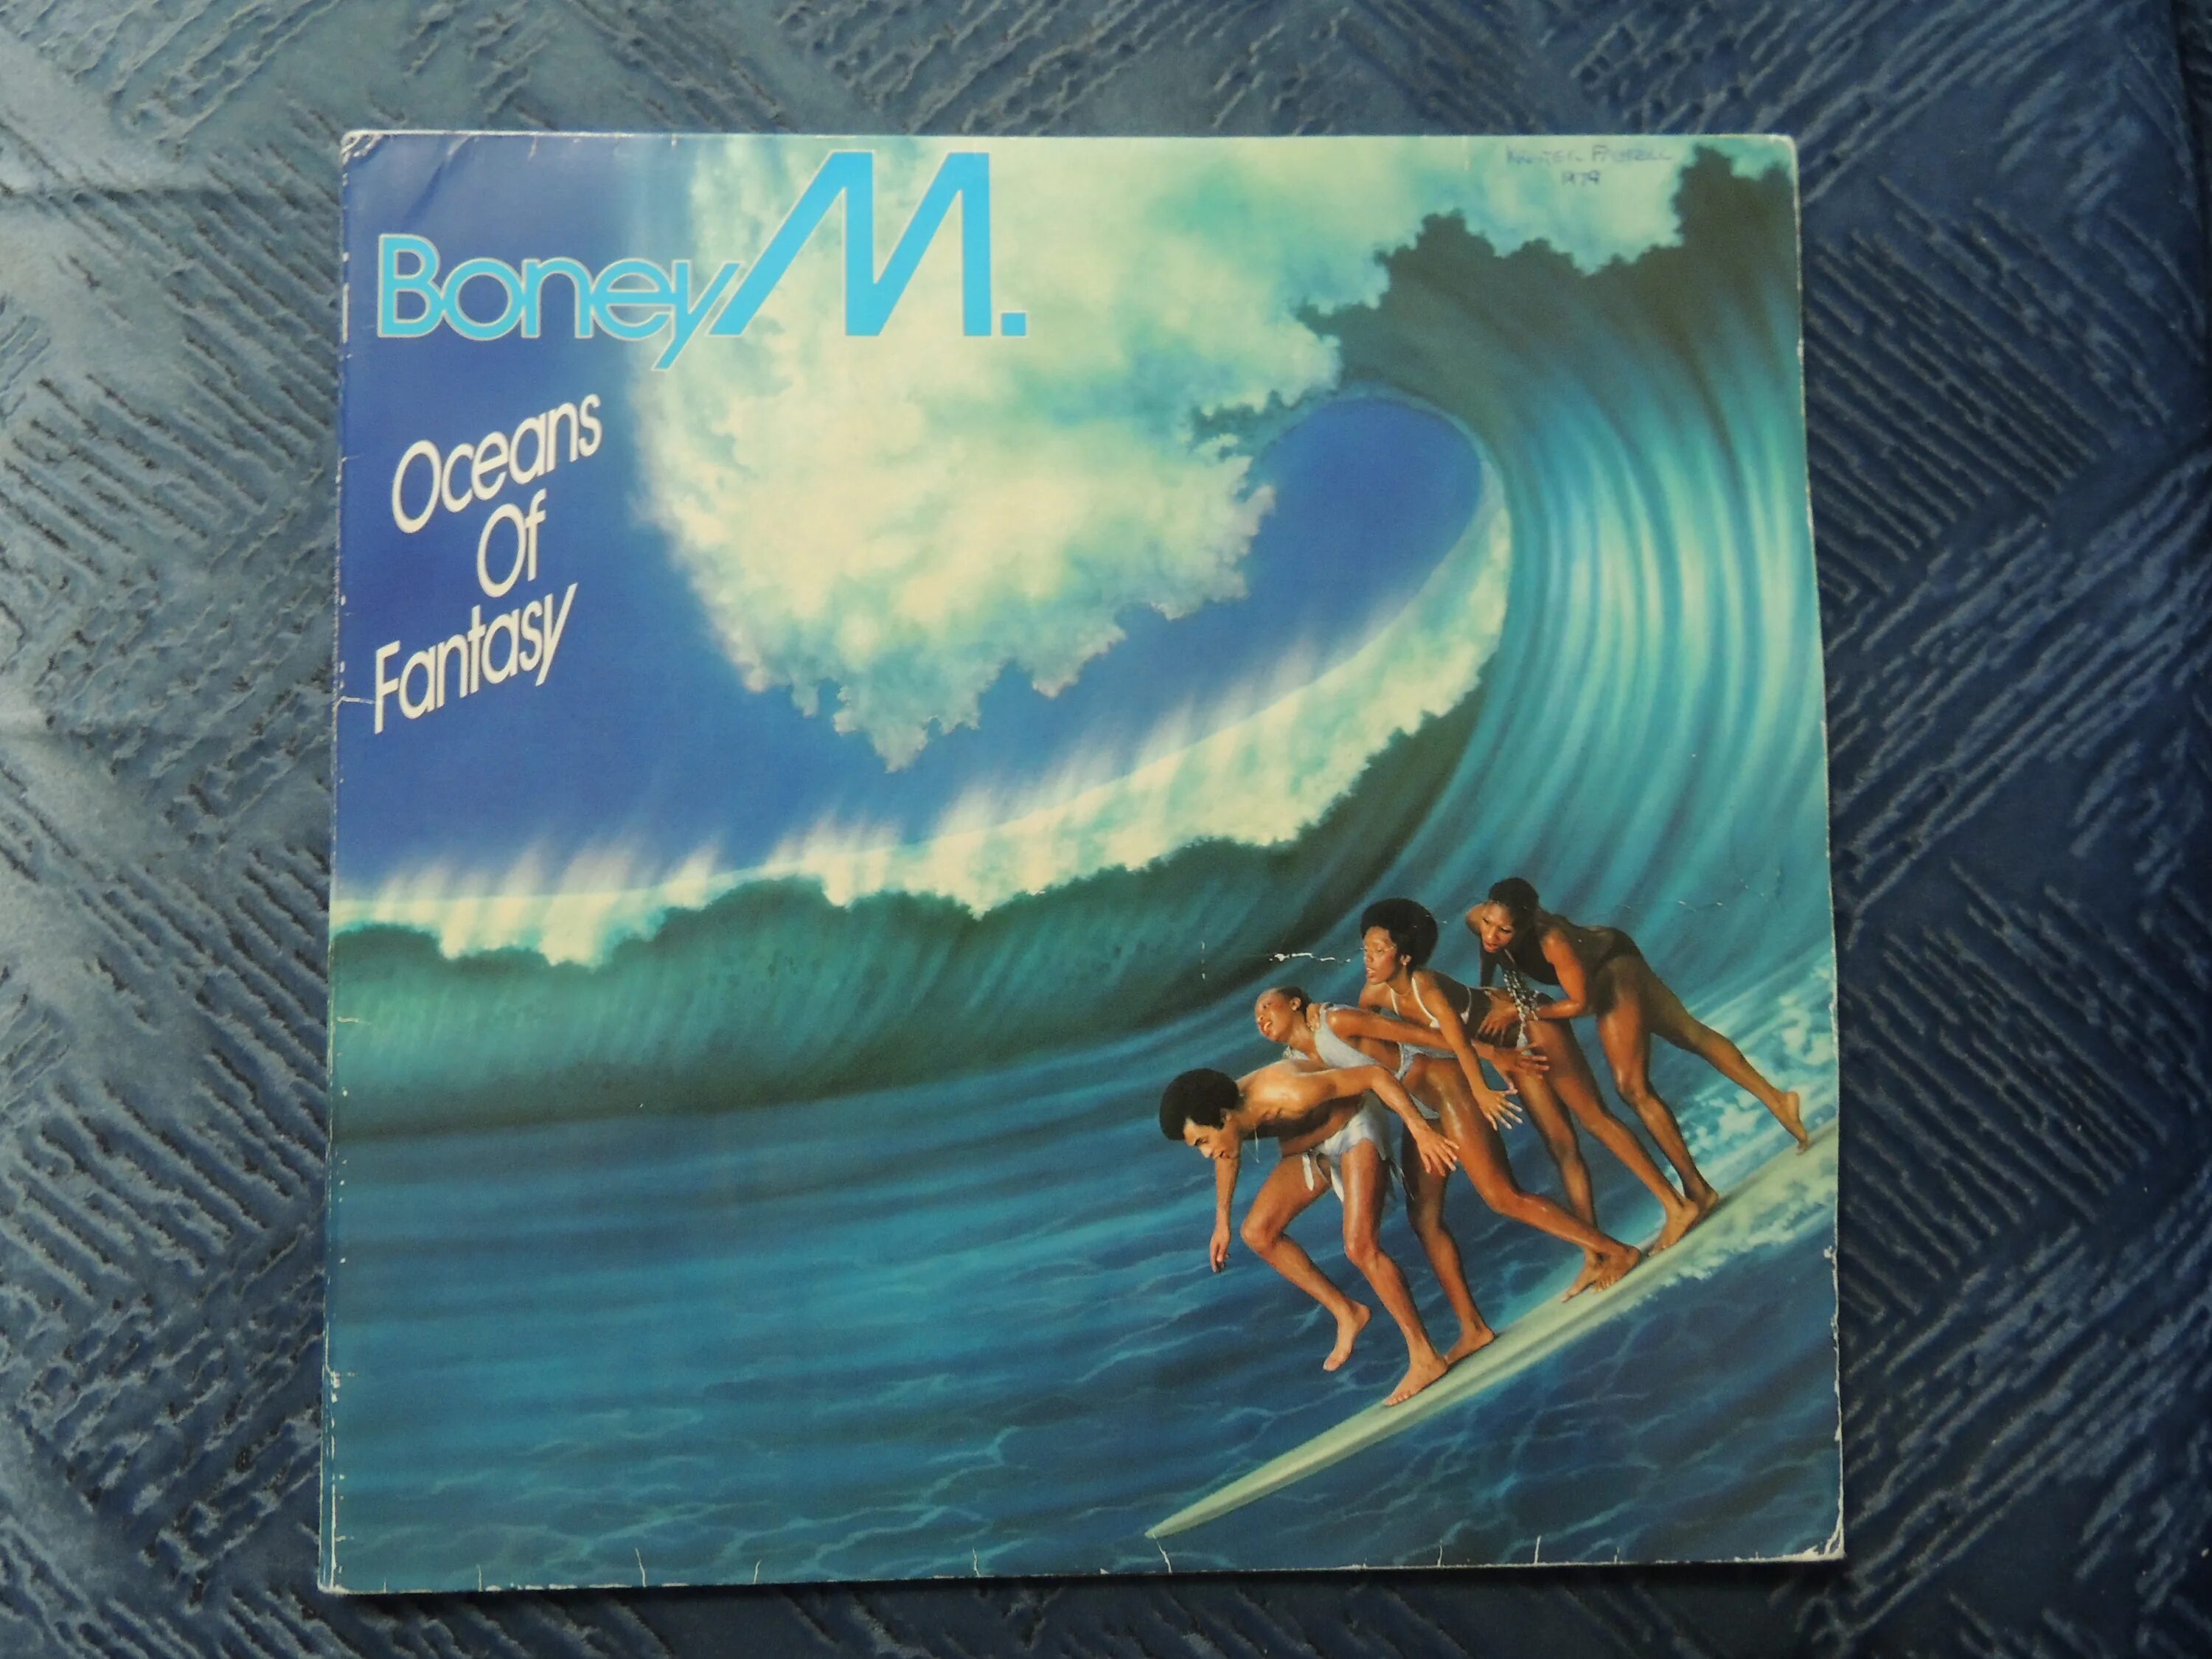 Boney m Oceans of Fantasy 1979 пластинка. Boney m Oceans of Fantasy 1979 LP. Альбомы Boney m - (Oceans of Fantasy) - 1979г. Boney m Oceans of Fantasy обложка.